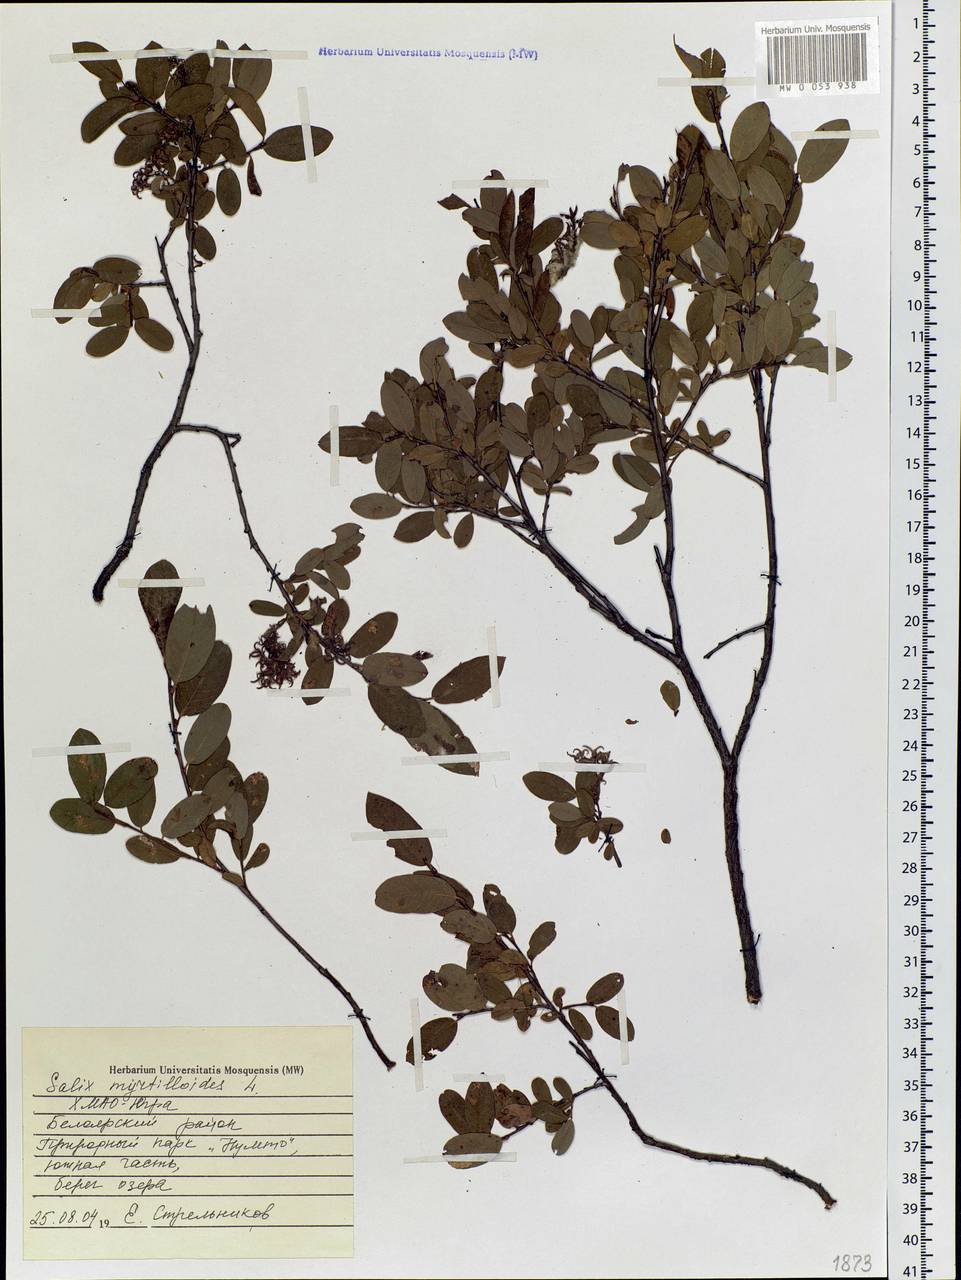 Salix myrtilloides, Siberia, Western Siberia (S1) (Russia)